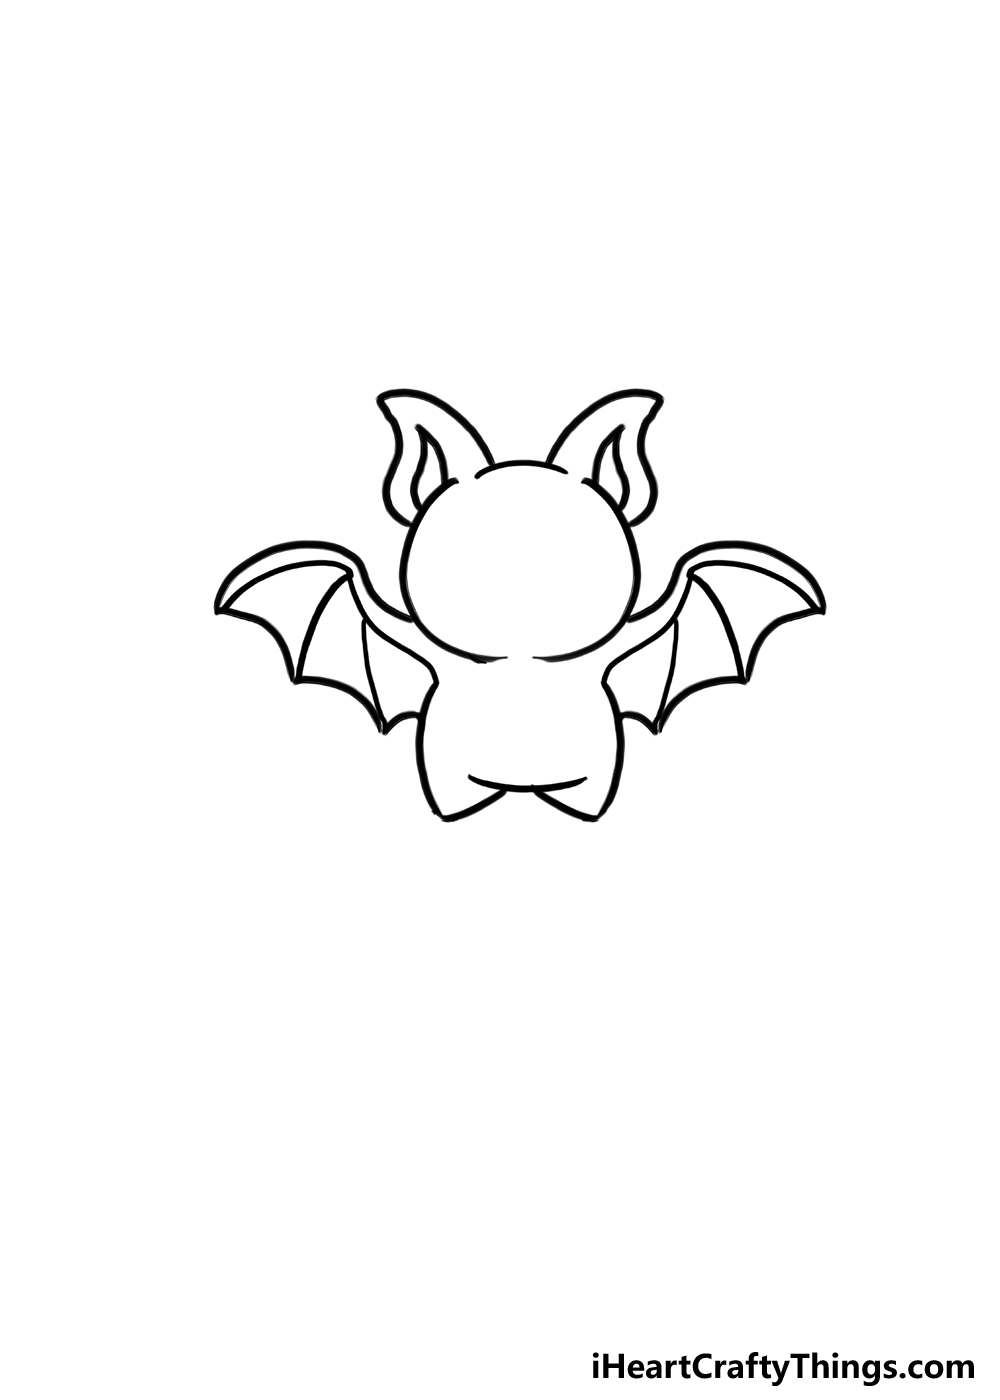 How to Draw A Cute Bat step 4